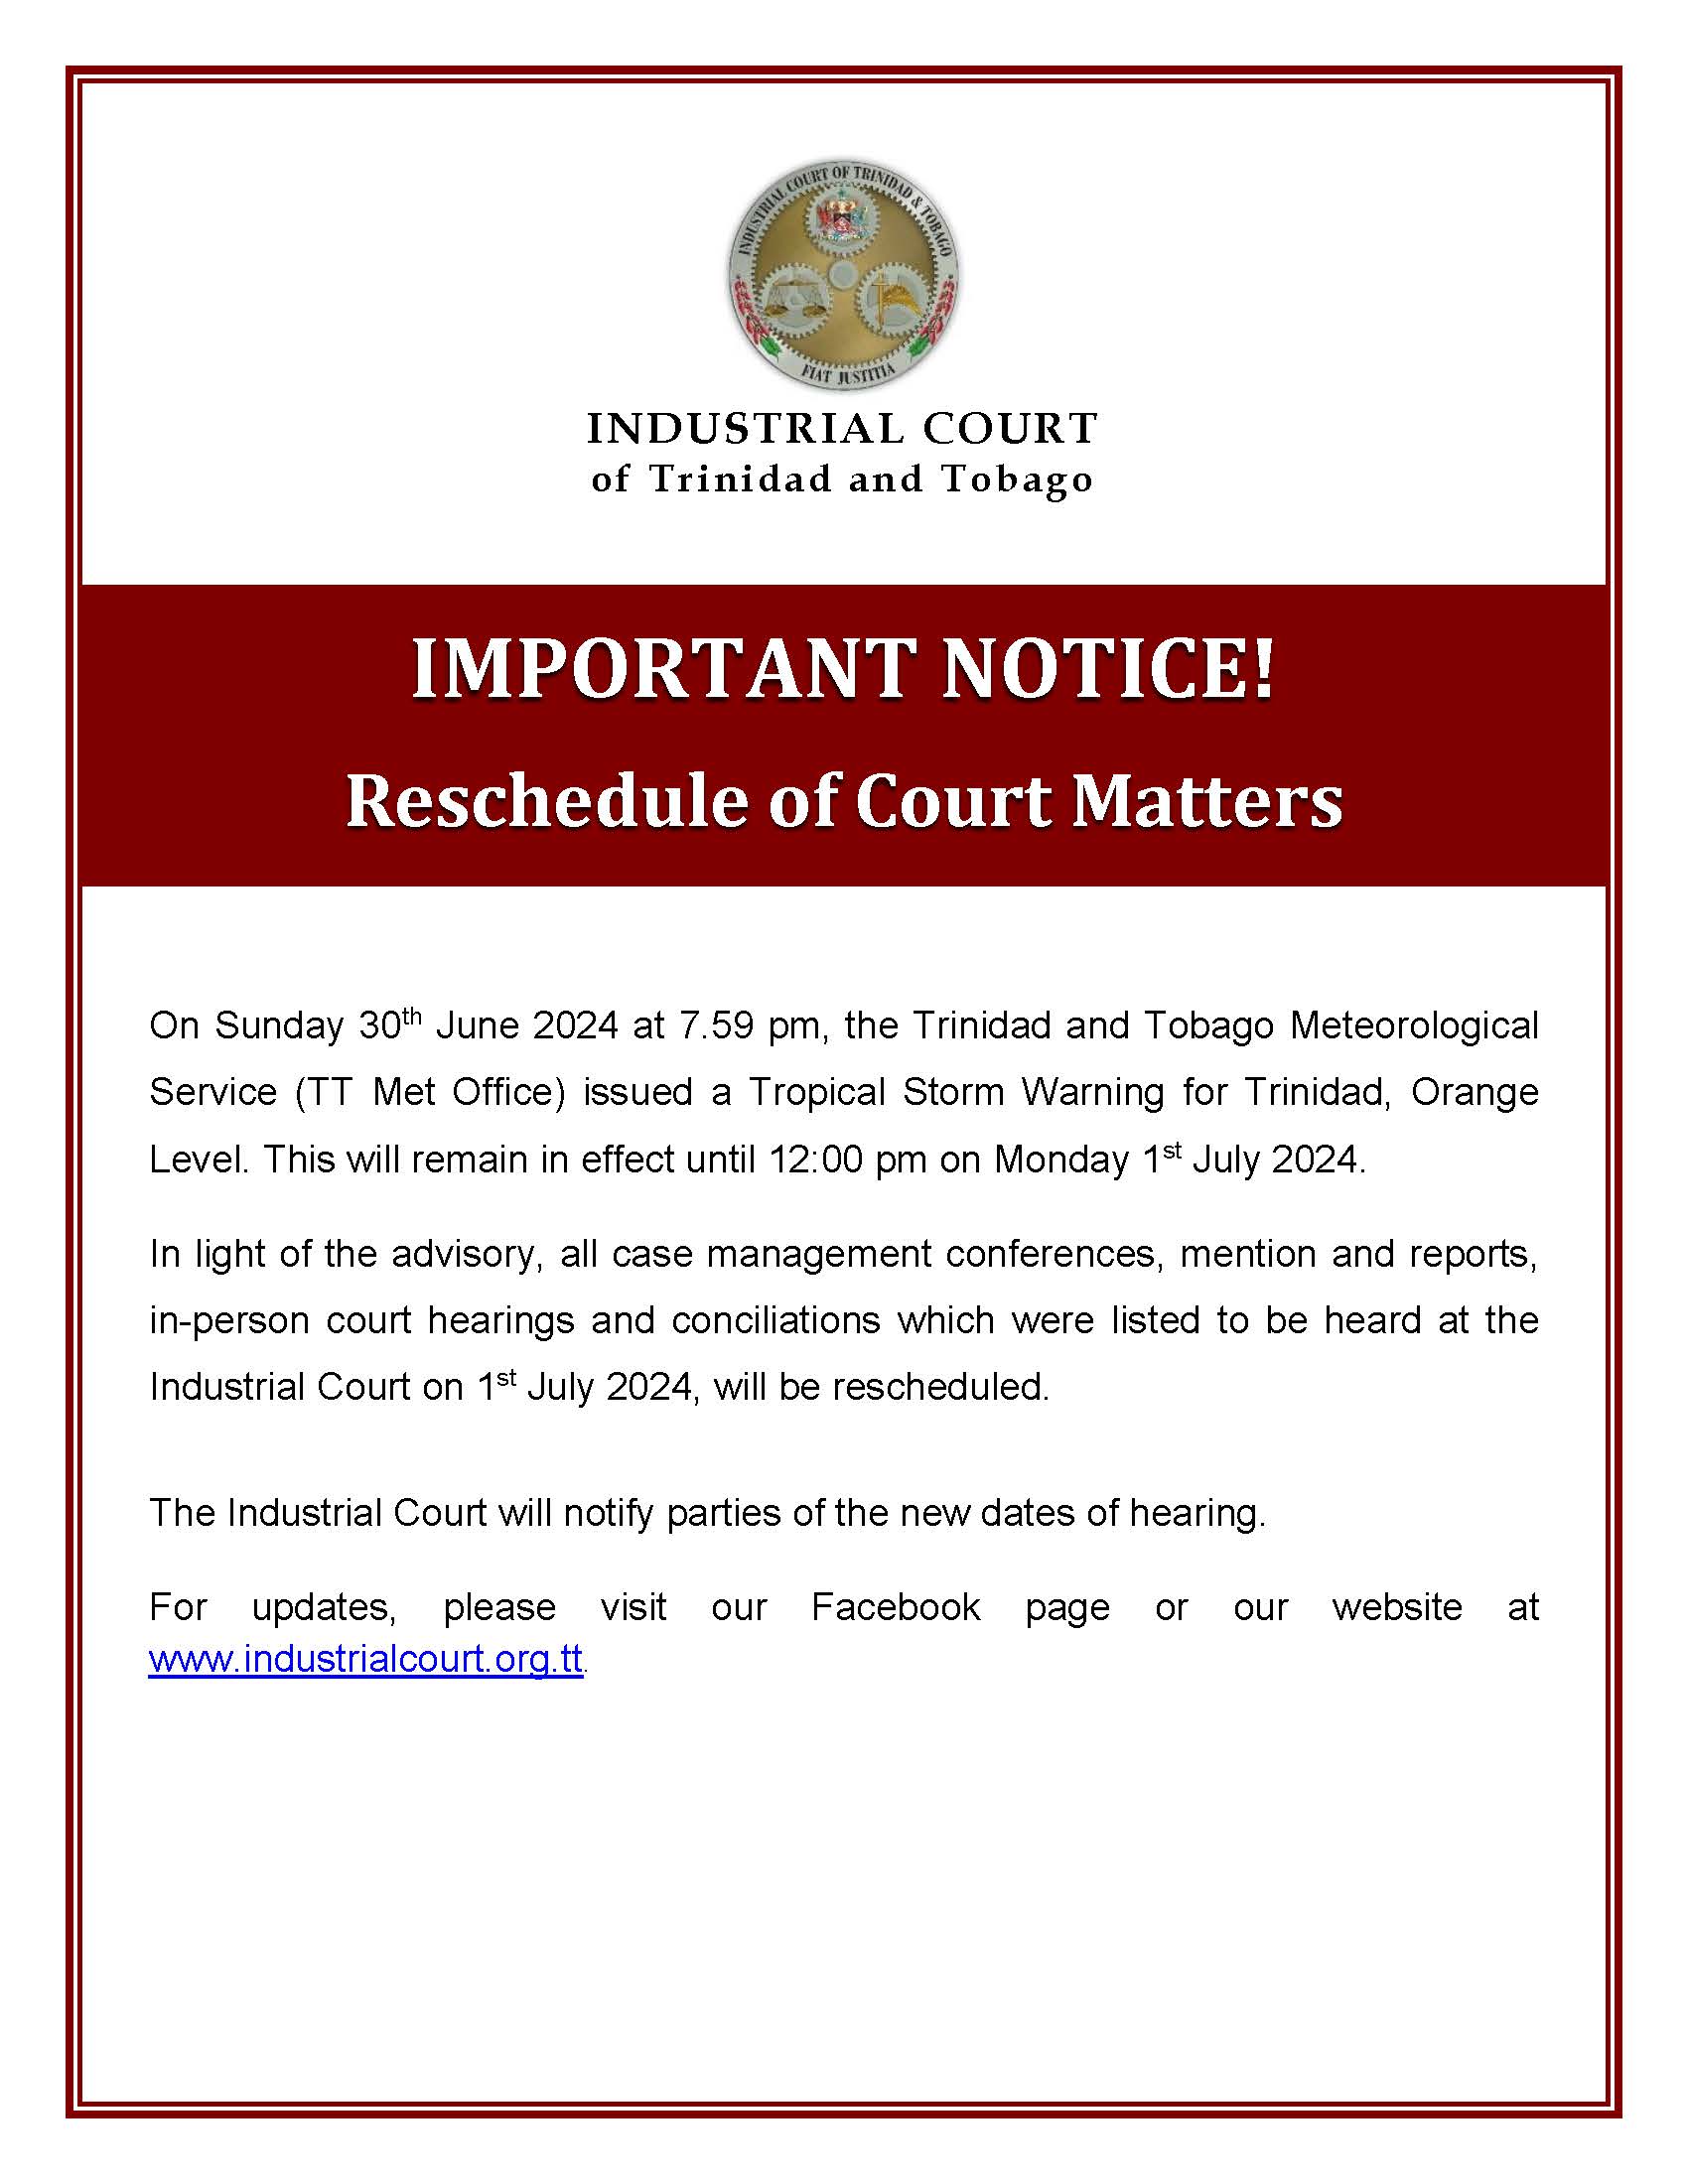 IMPORTANT NOTICE Reschedule of Court Matters